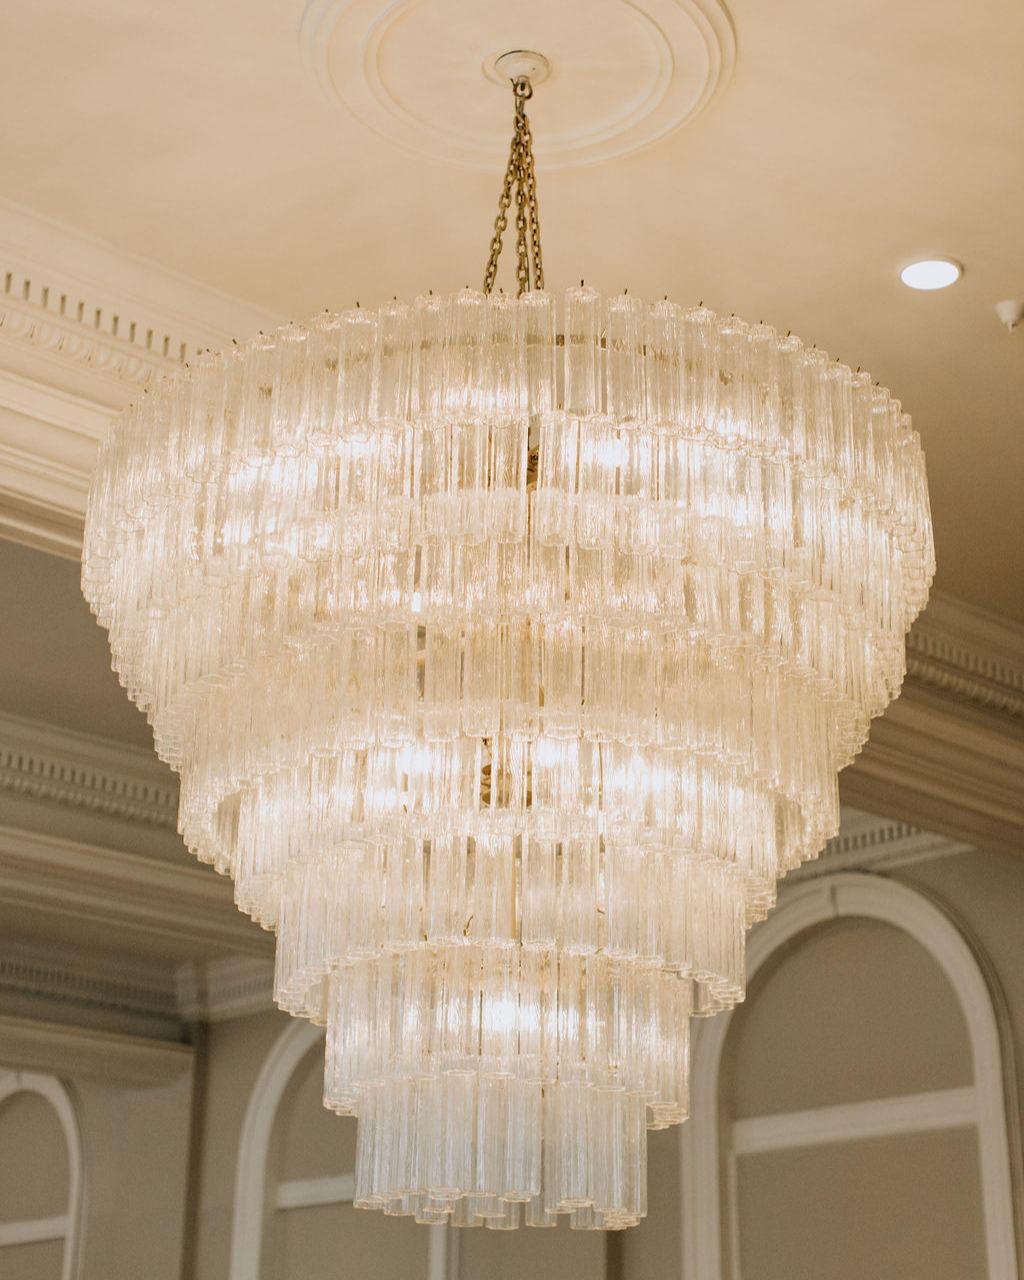 The Kenmore Ballroom chandelier